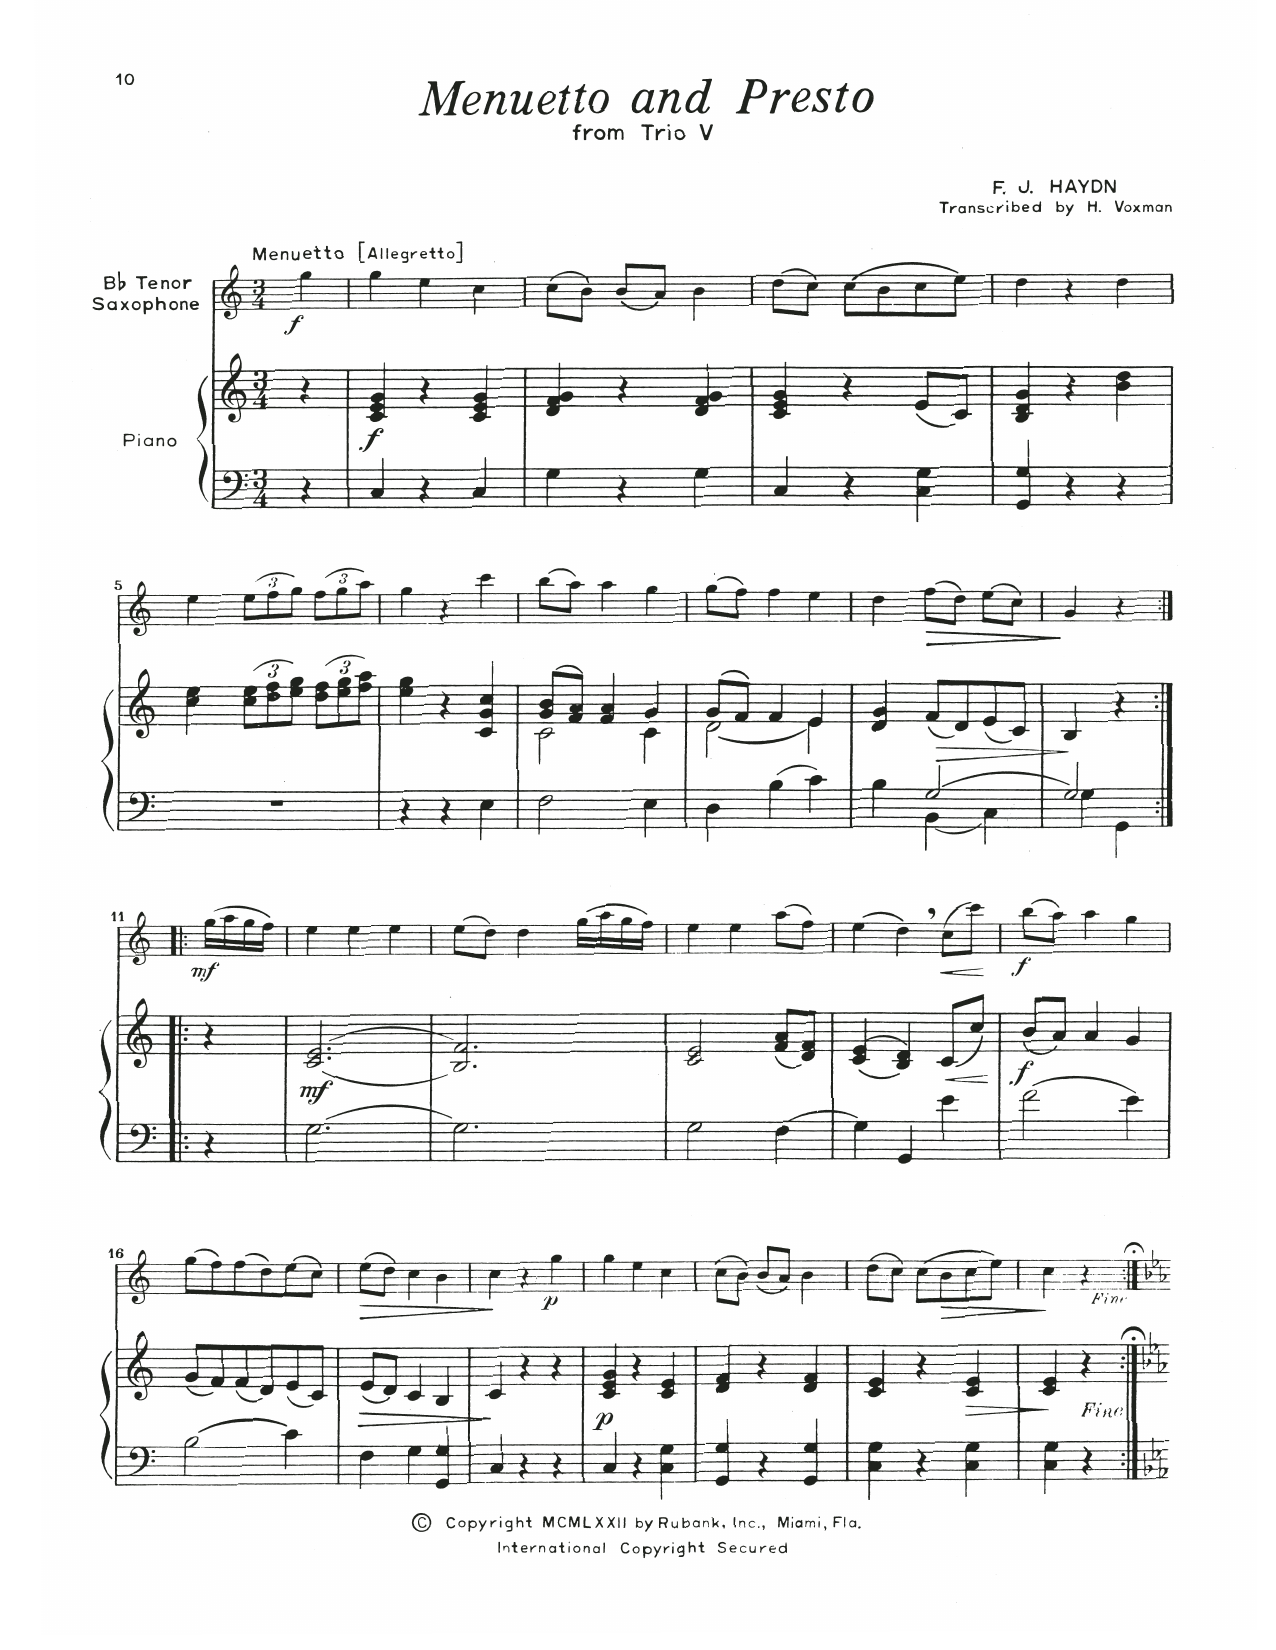 Franz Joseph Haydn Menuetto & Presto (Trio V) sheet music notes and chords arranged for Tenor Sax and Piano